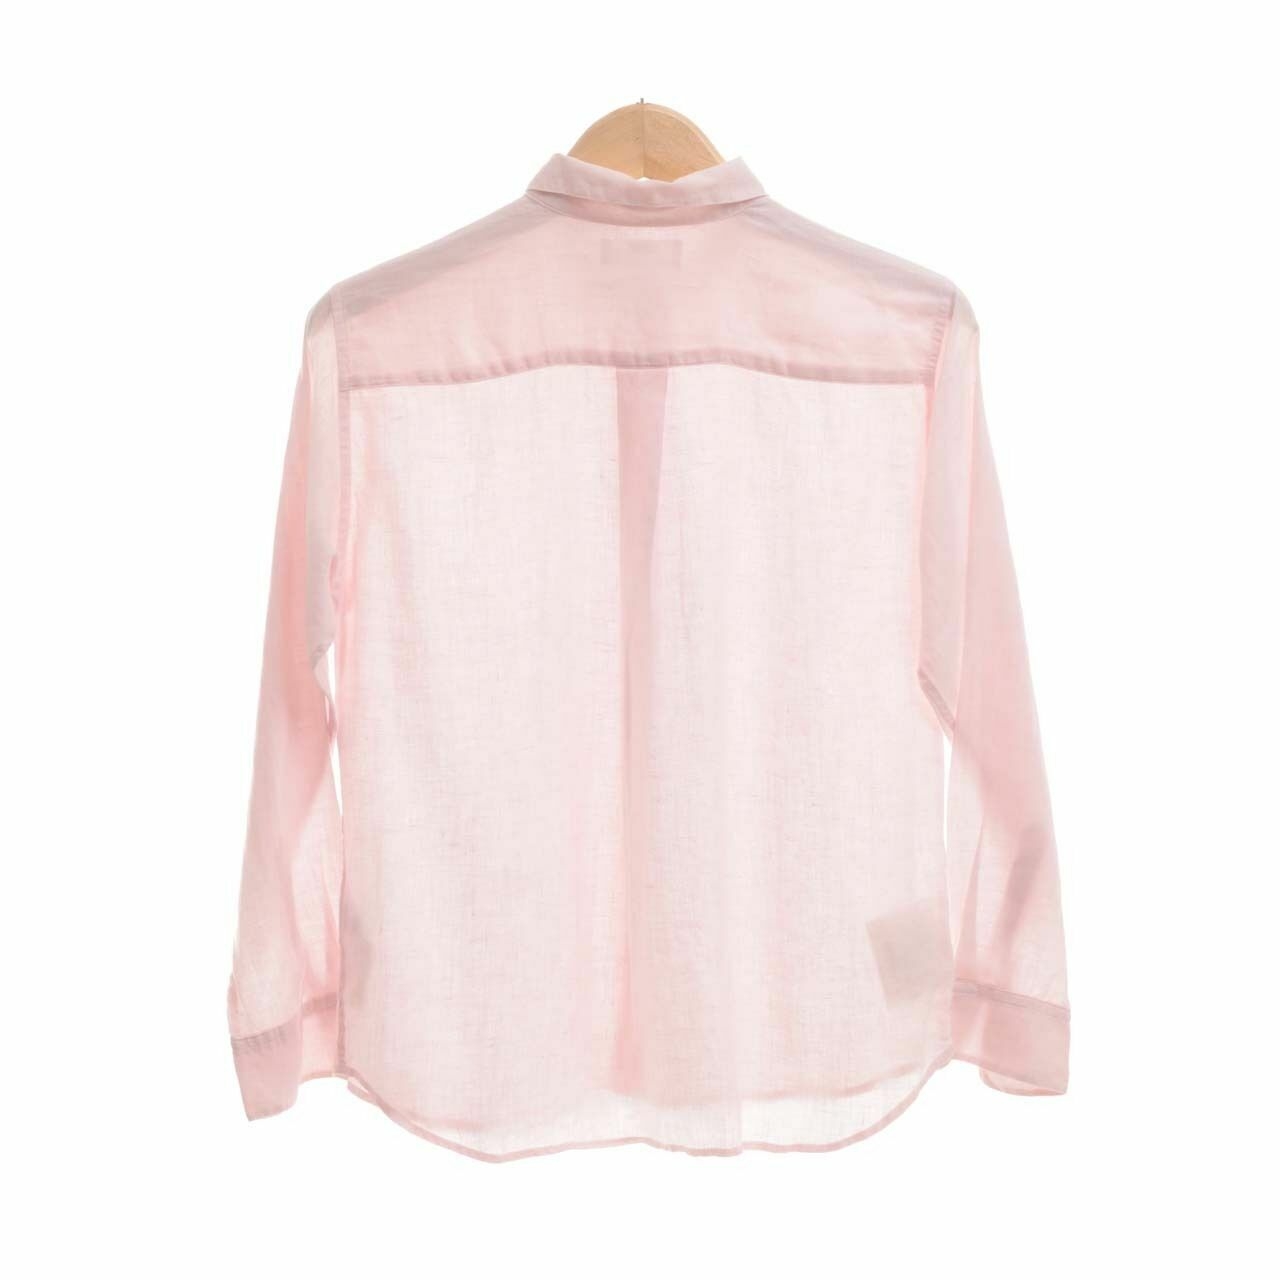 UNIQLO Pink Long Sleeve Shirt